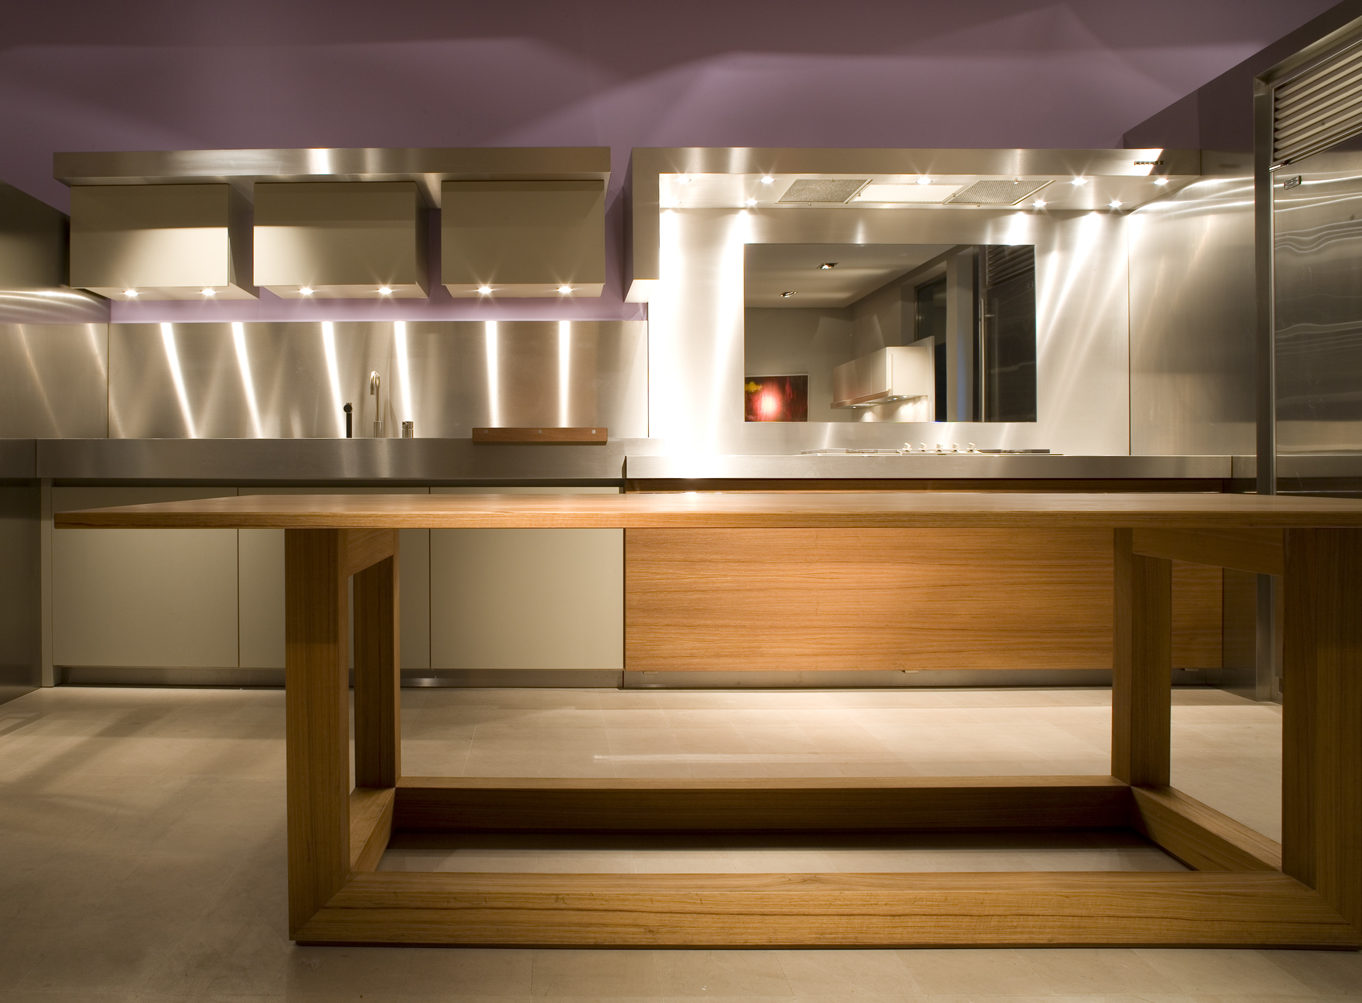 Strato_design_Non Plus Ultra_bespoke kitchen project in Milano_Teak wood_mat stainless steel_stratocolor tortora_15